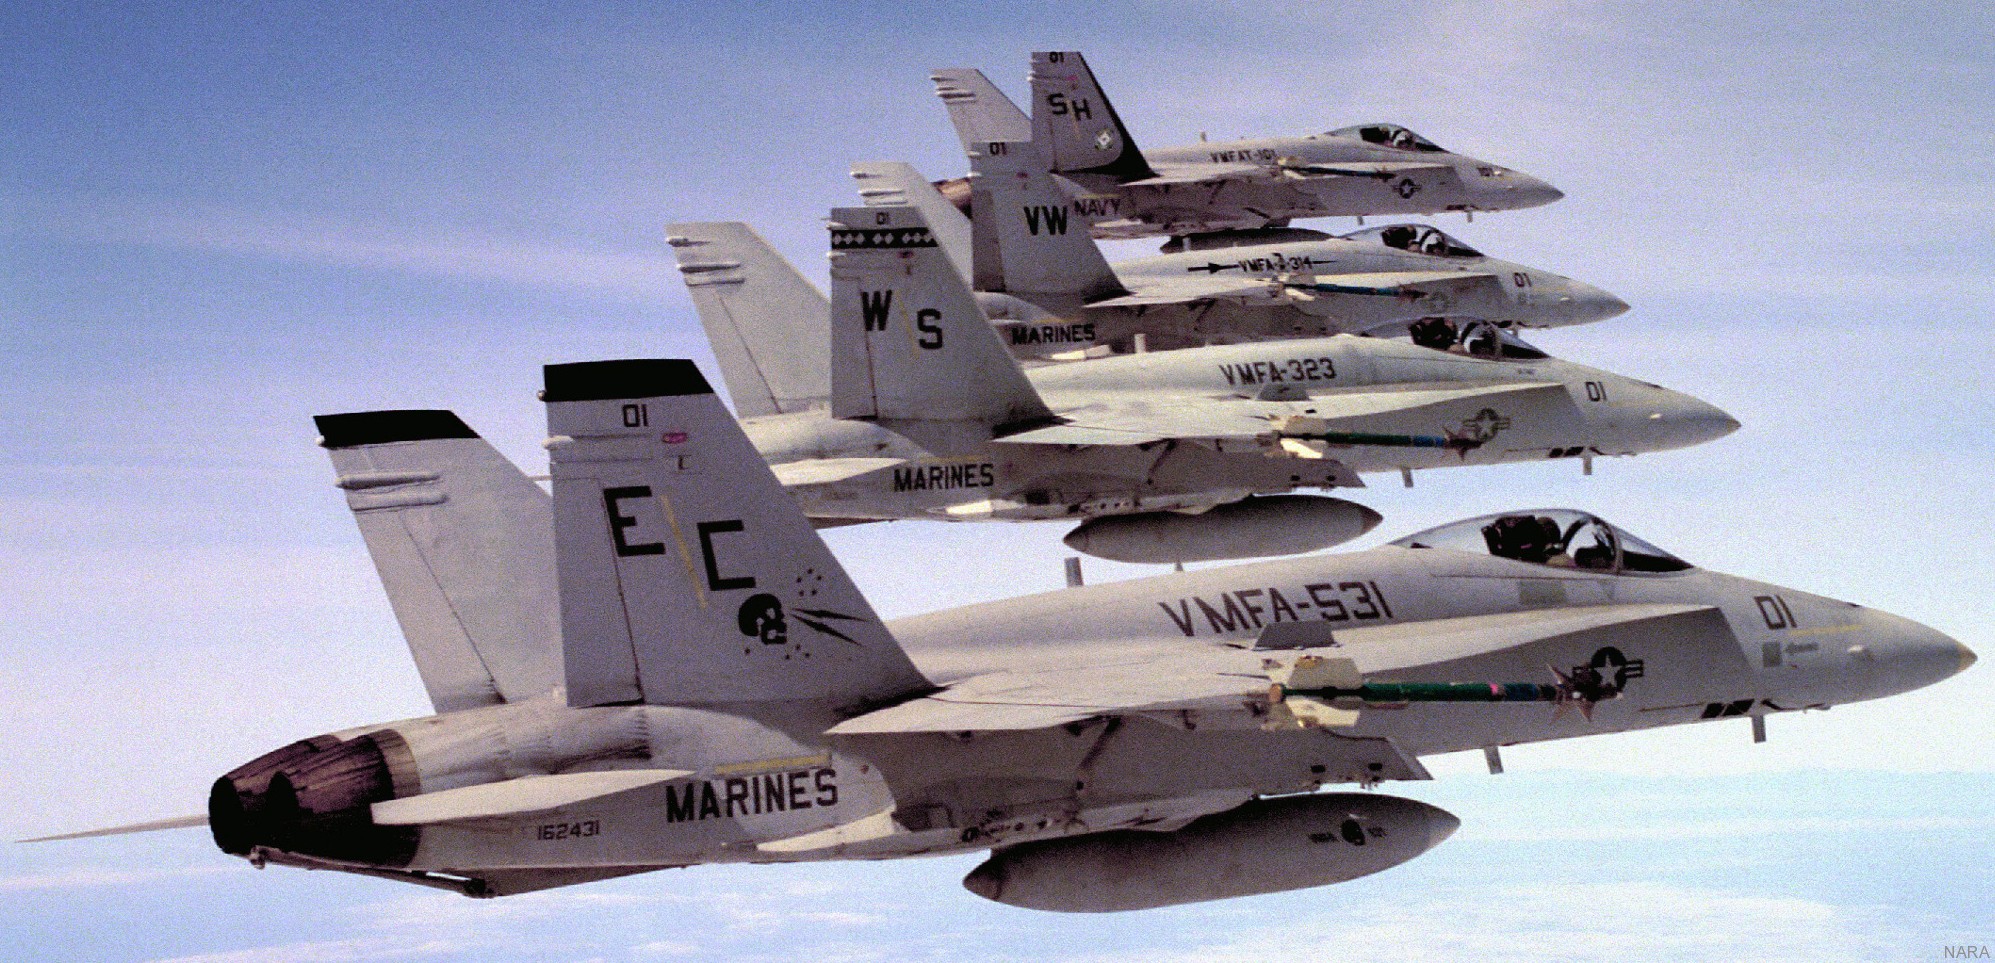 vmfa-323 death rattlers marine fighter attack squadron f/a-18a hornet mcas el toro california